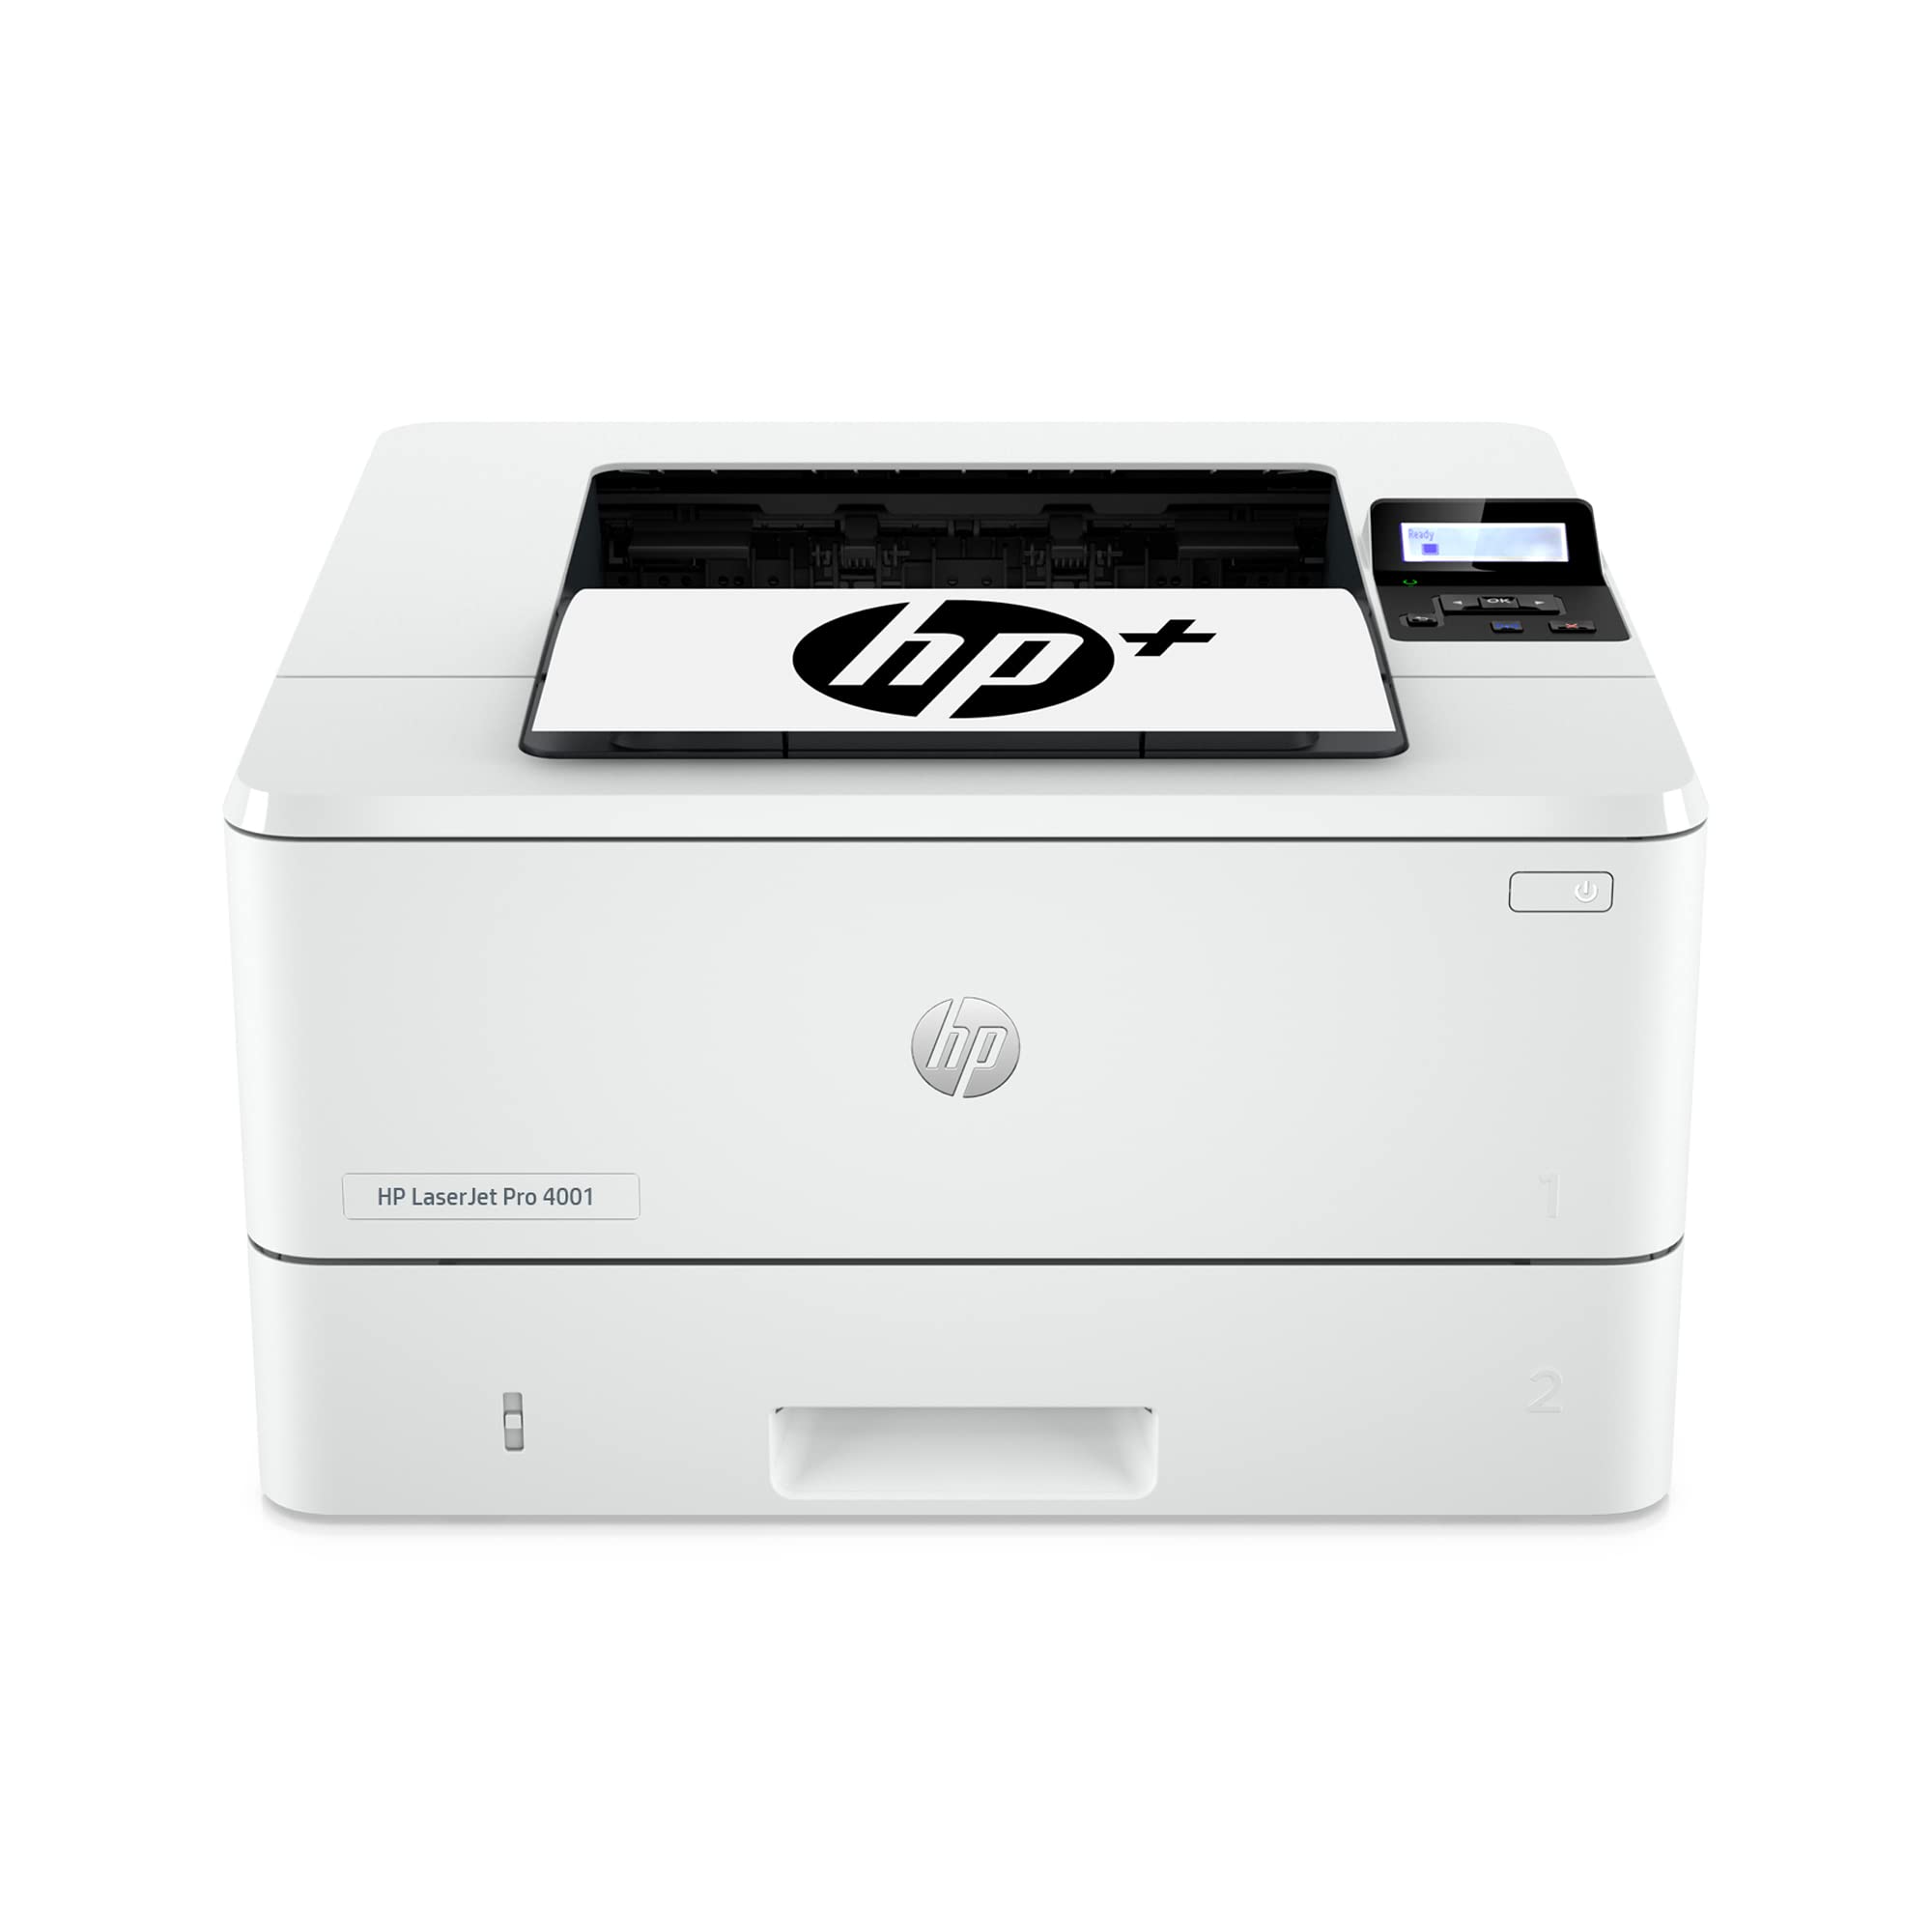 HP LaserJet Pro 4001dwe Беспроводной черно-белый принте...